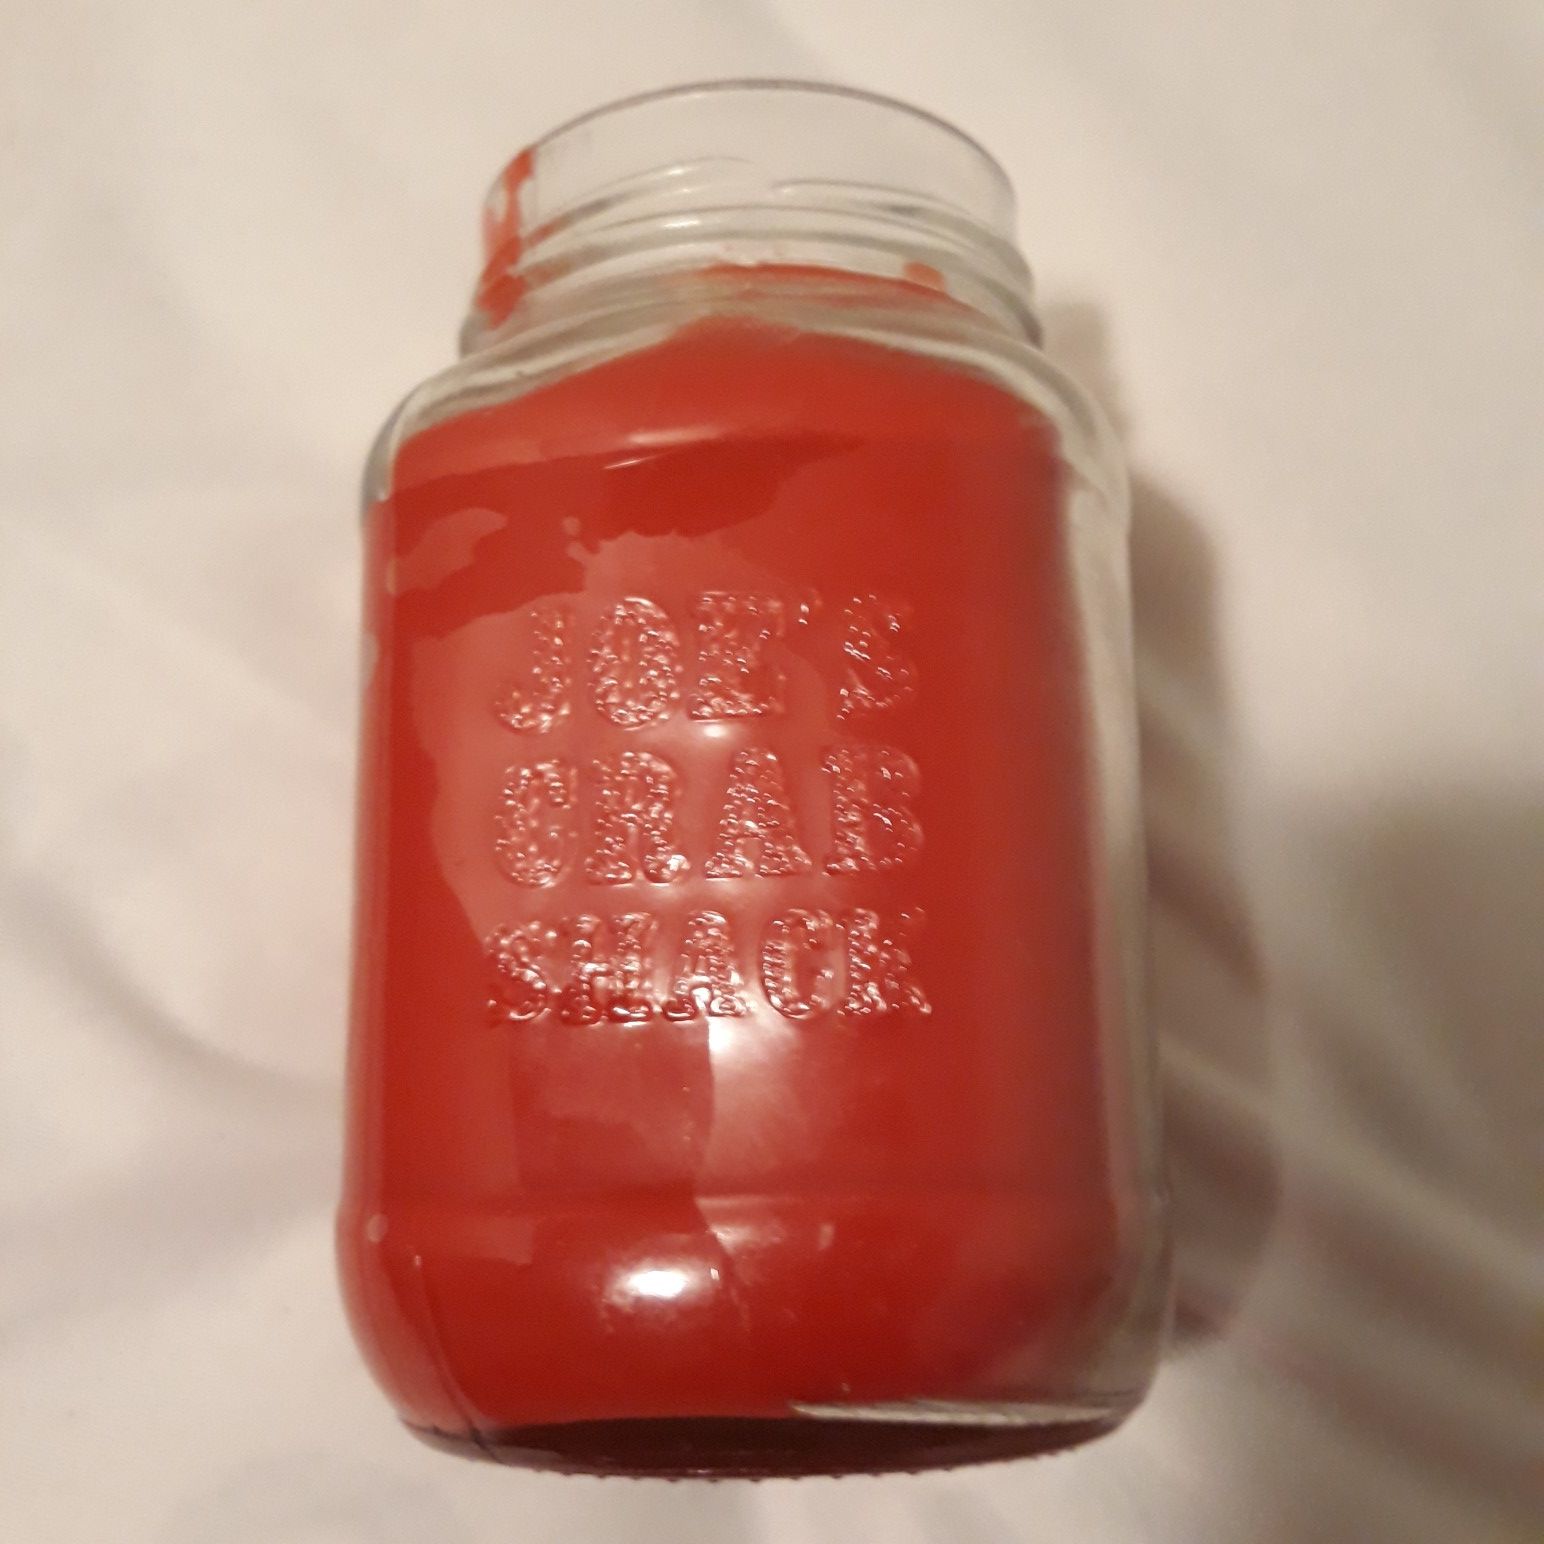 Joe's Crab Shack Mason Jar With Red Wax Inside